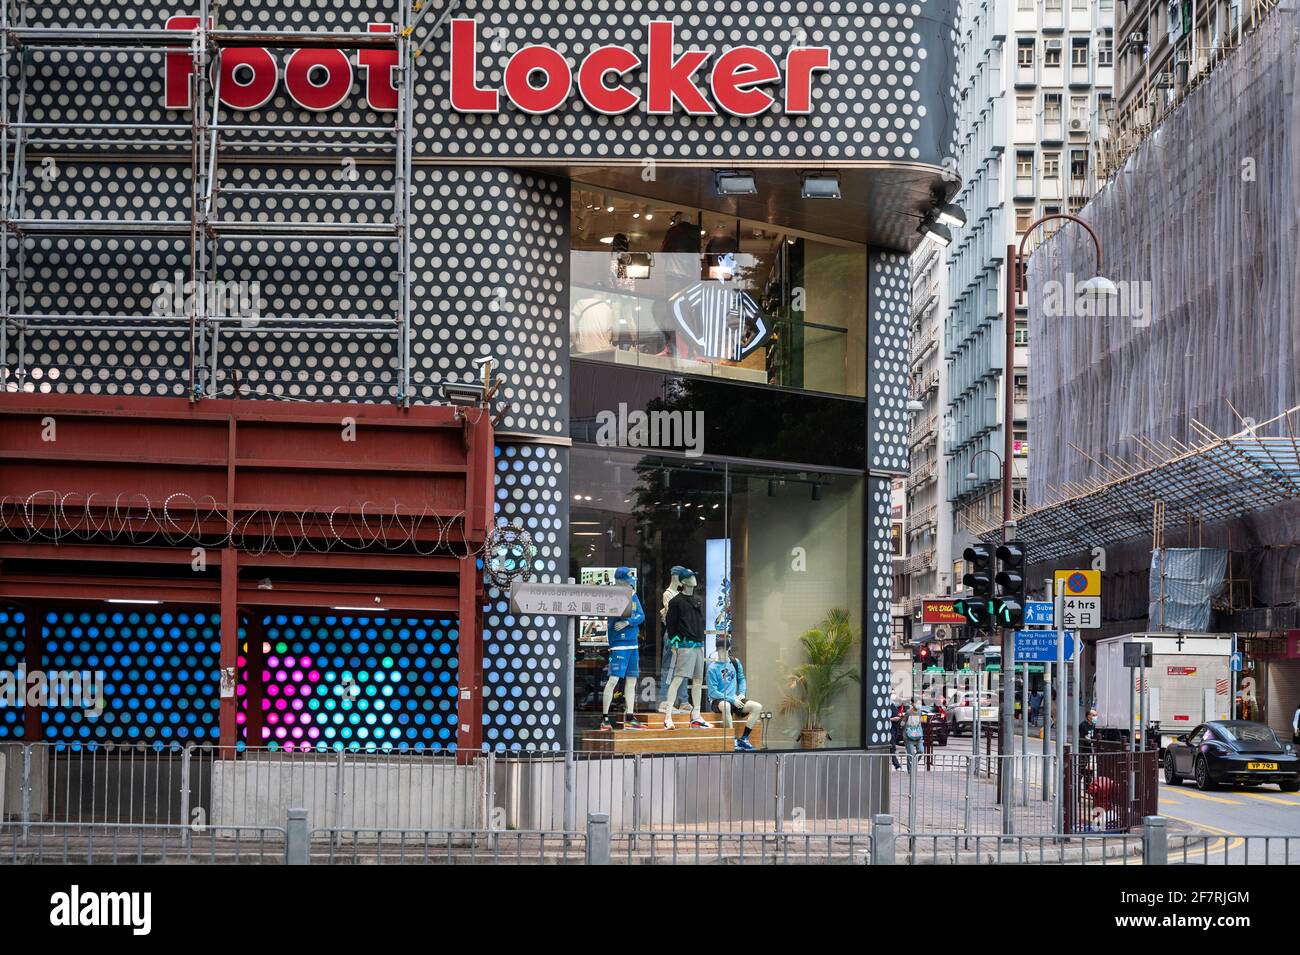 Foot Locker: marketing secrets of sportswear and footwear retail -  Candid.News